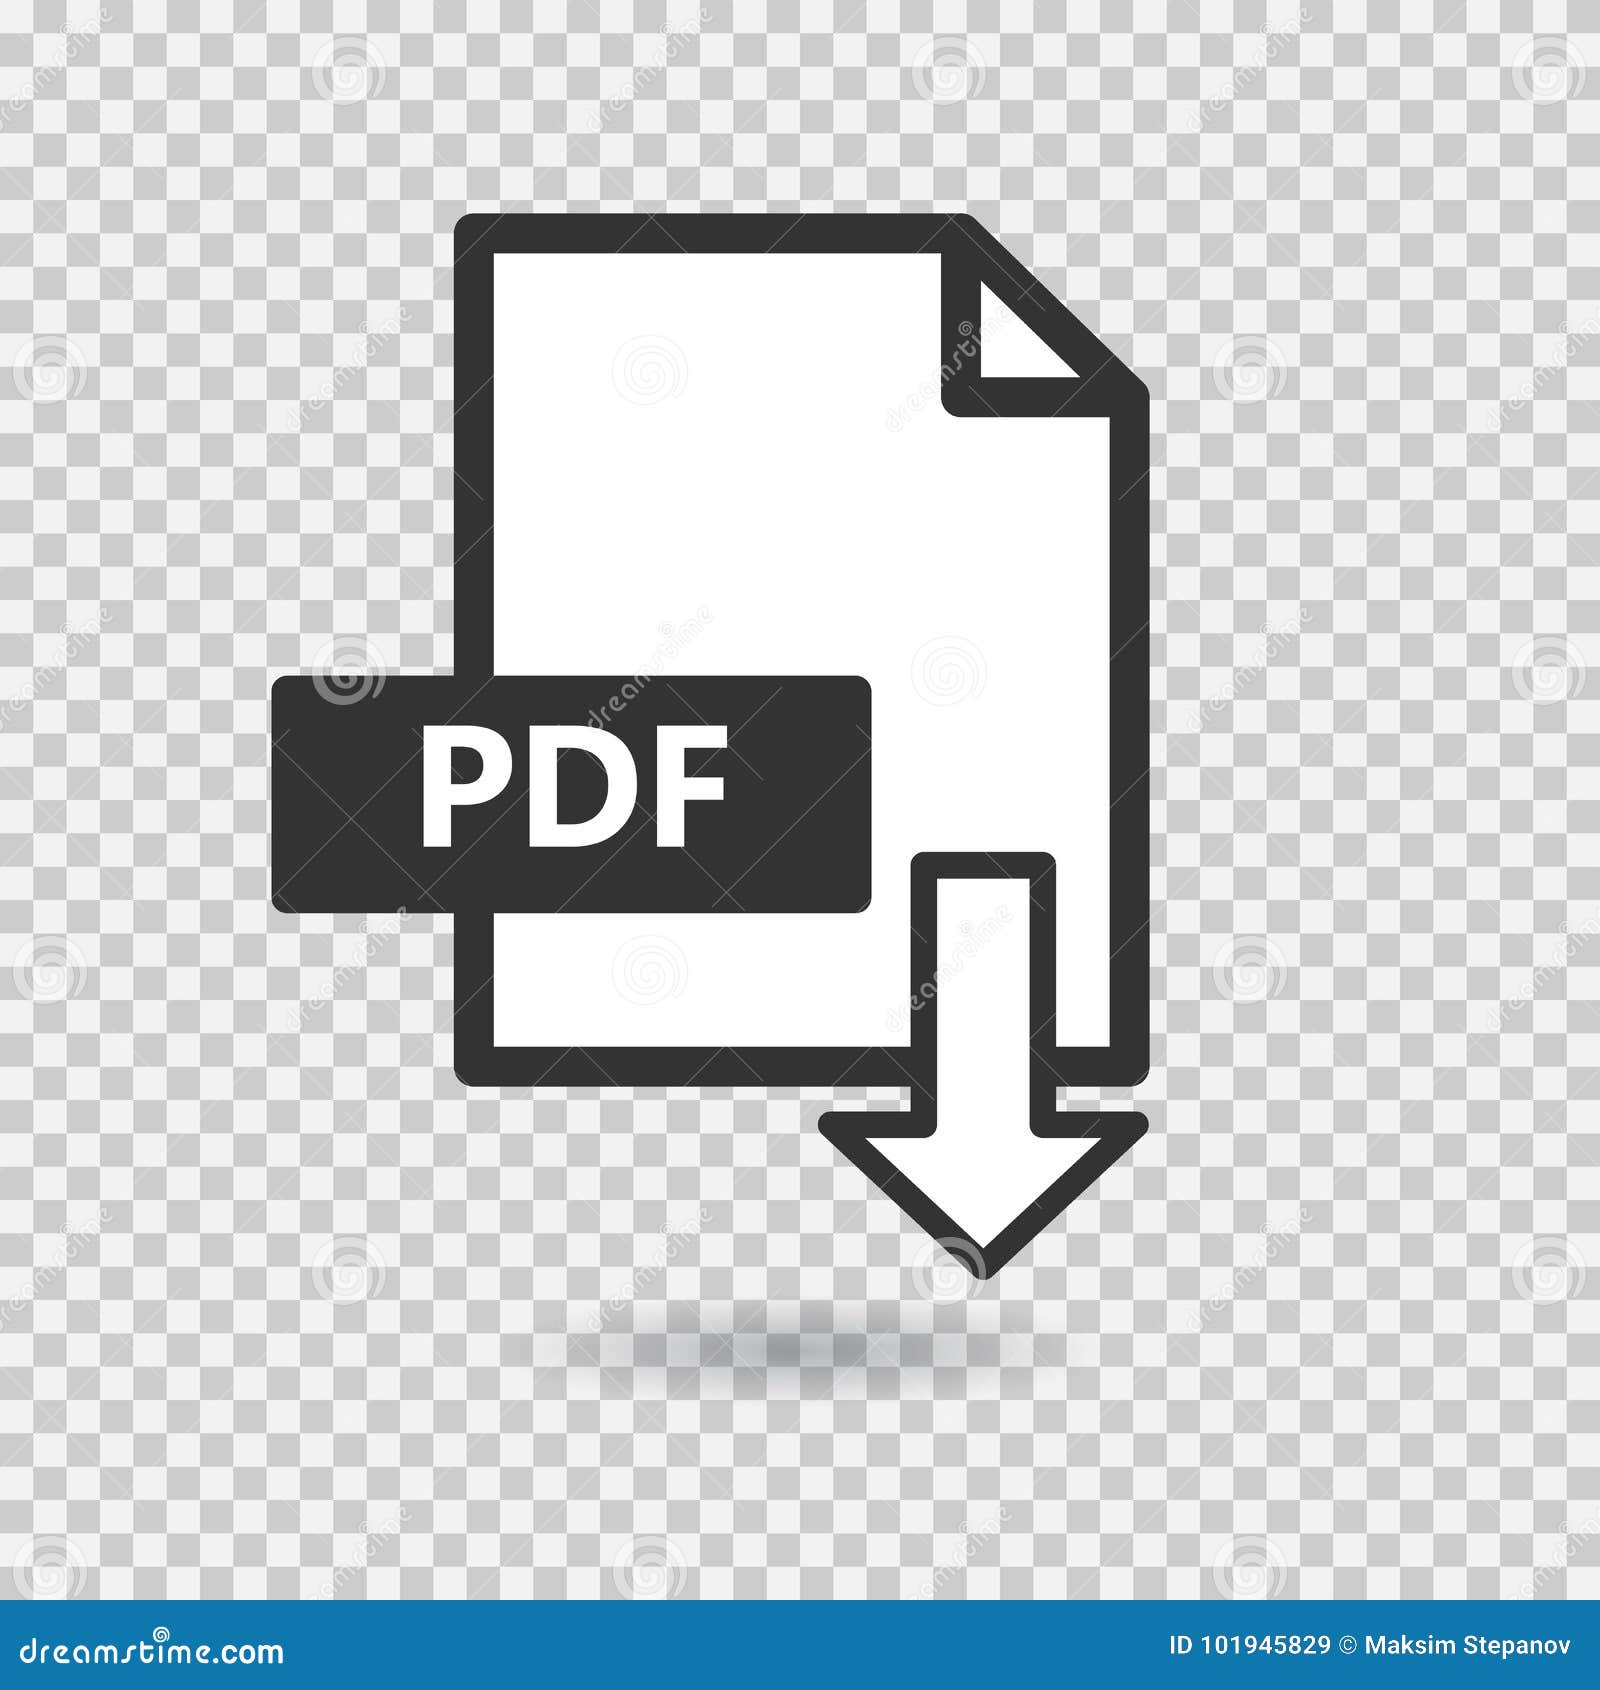 pdf  icon on transparent background